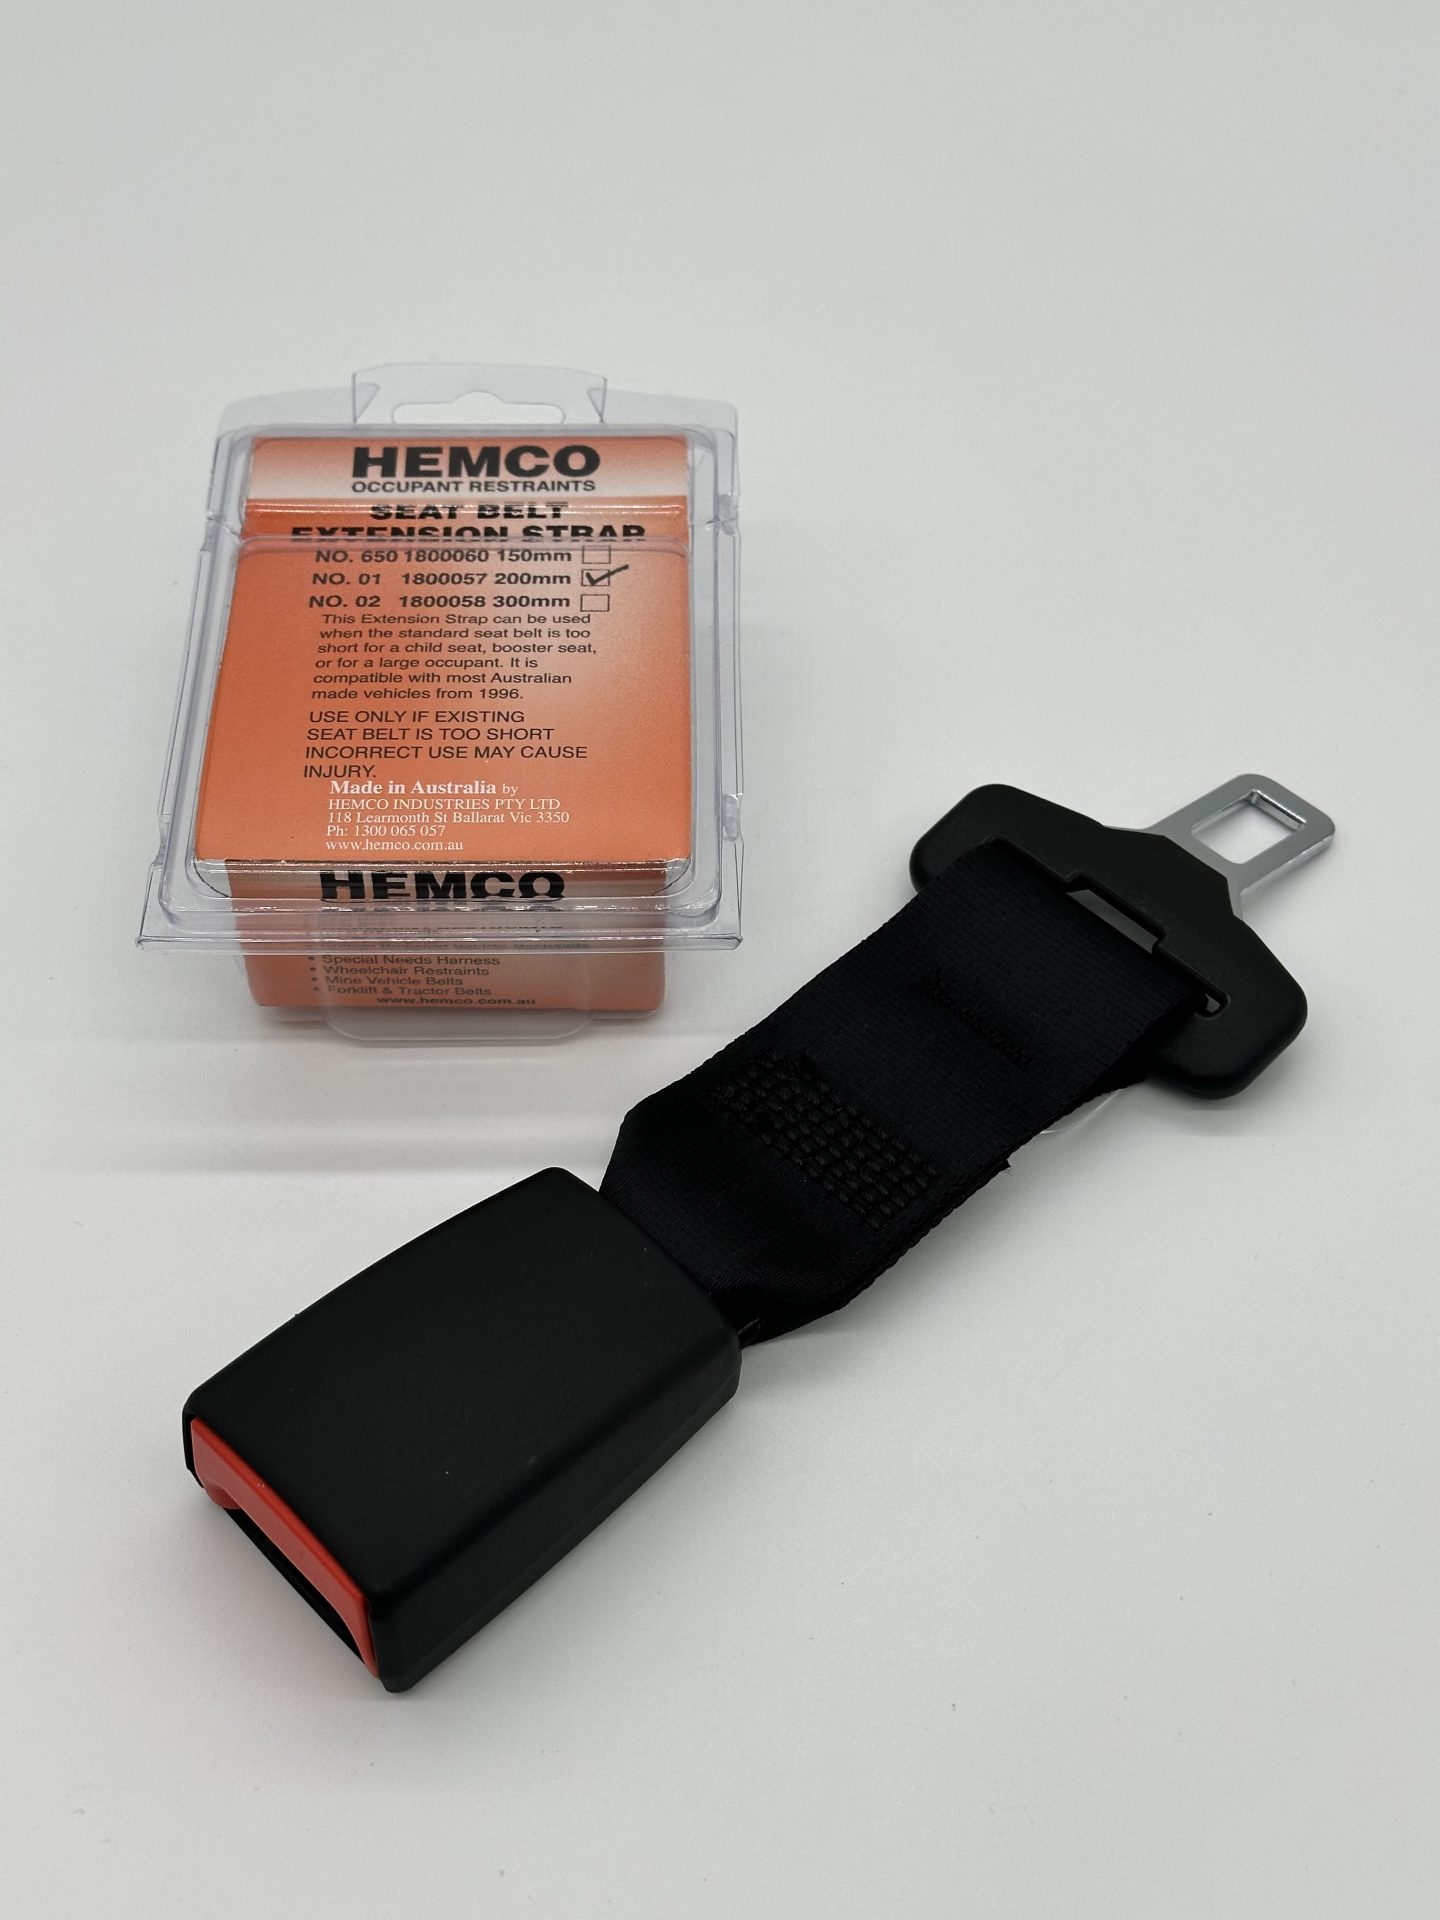 Seatbelt Extensions - Type B - Hemco Industries